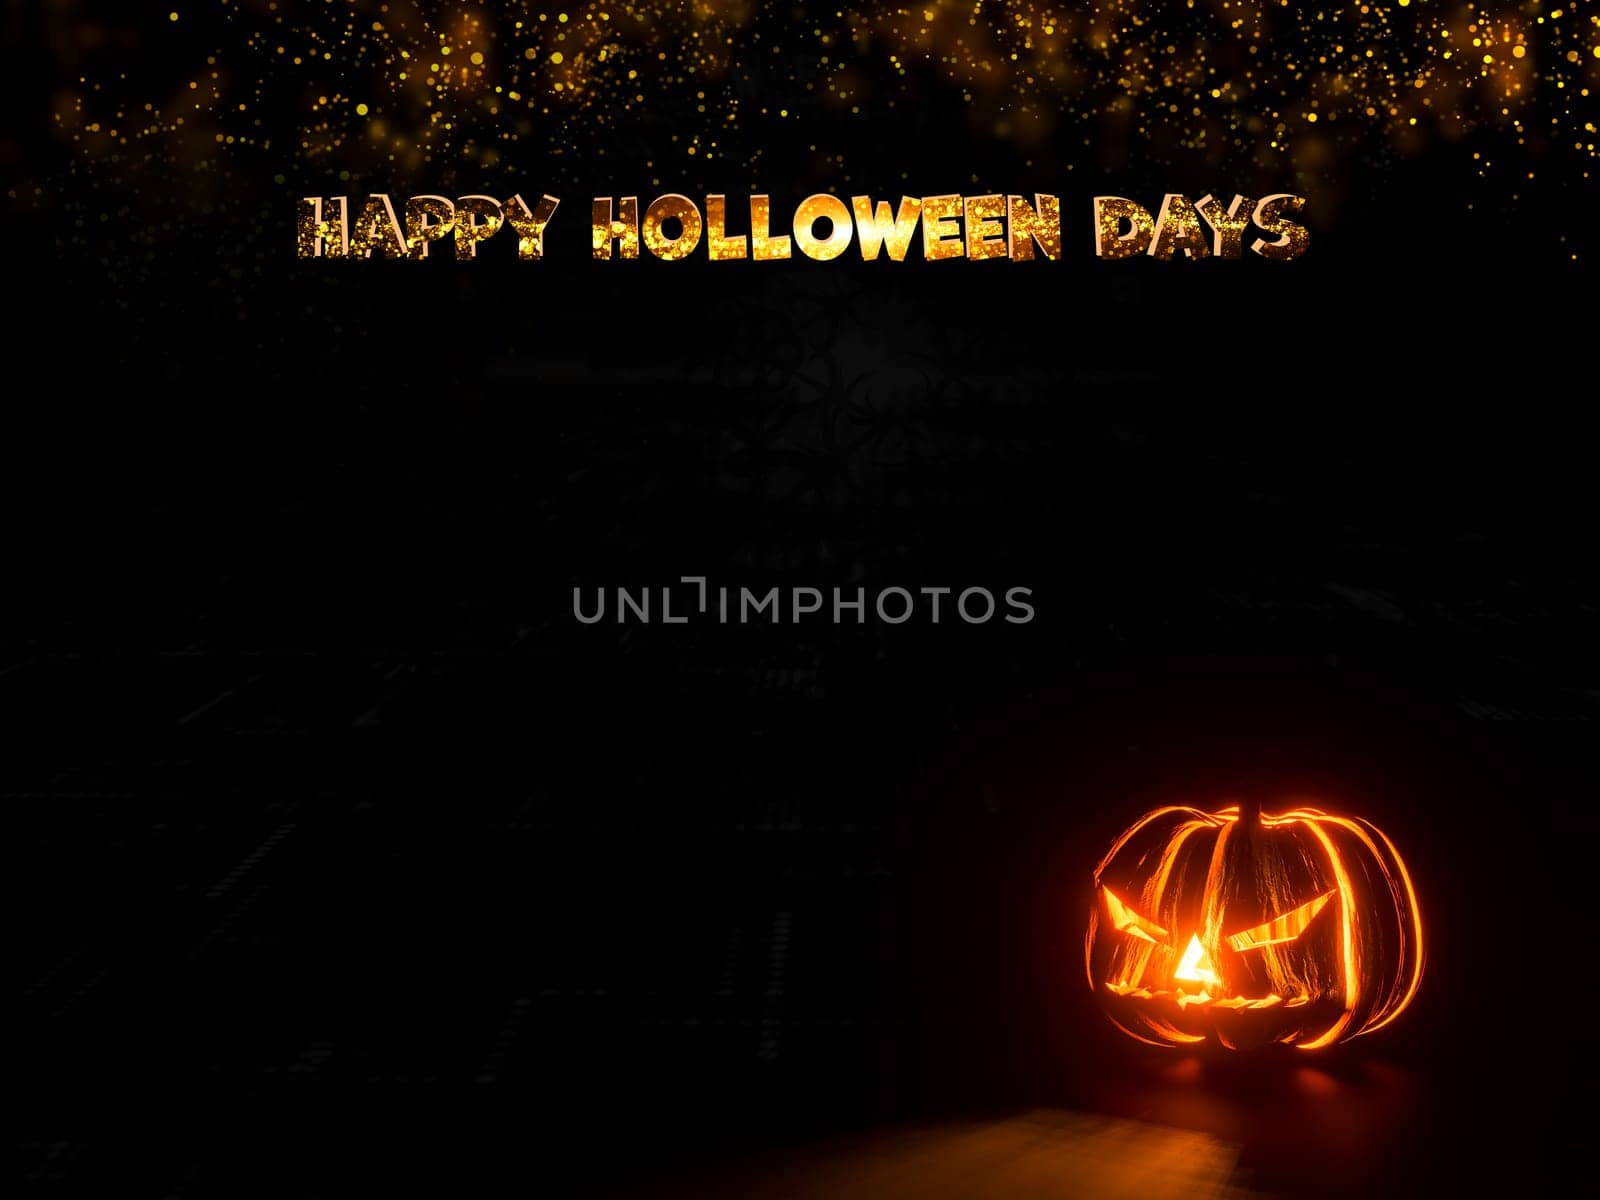 Happy Halloween pumpkin head jack o'lantern 3d rendering. Illustration holloween wallpaper with spooky pumpkin face, pumpkin lamp.